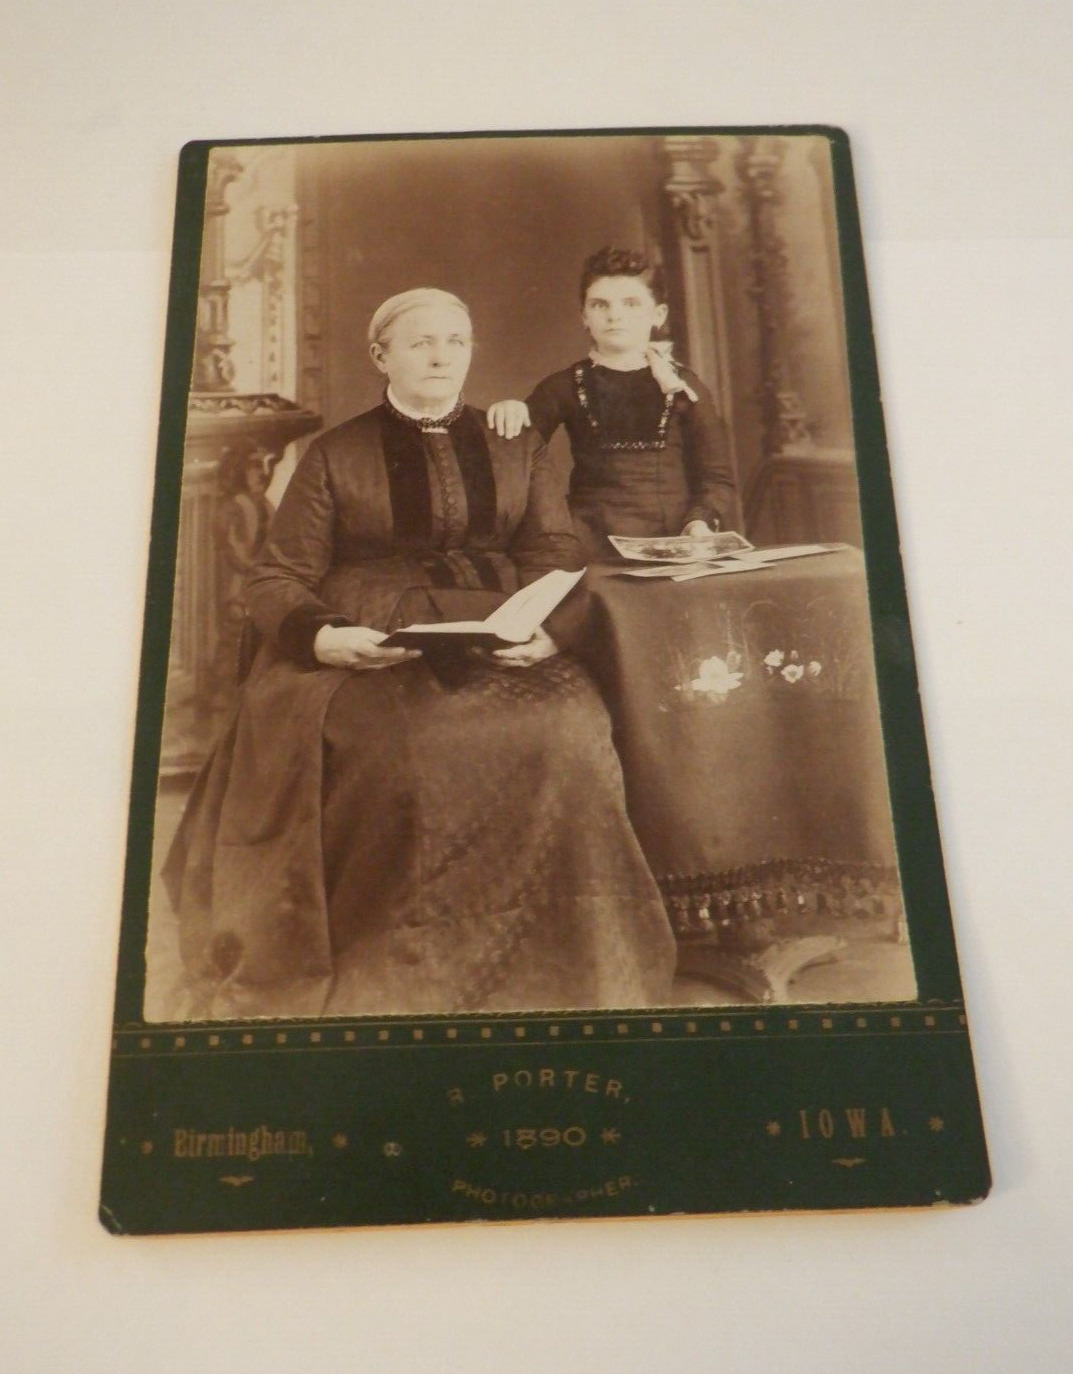 c.1890 BIRMINGHAM IOWA FAMILY CABINET CARD PHOTO PHOTOGRAPH PICTURE IA PORTER